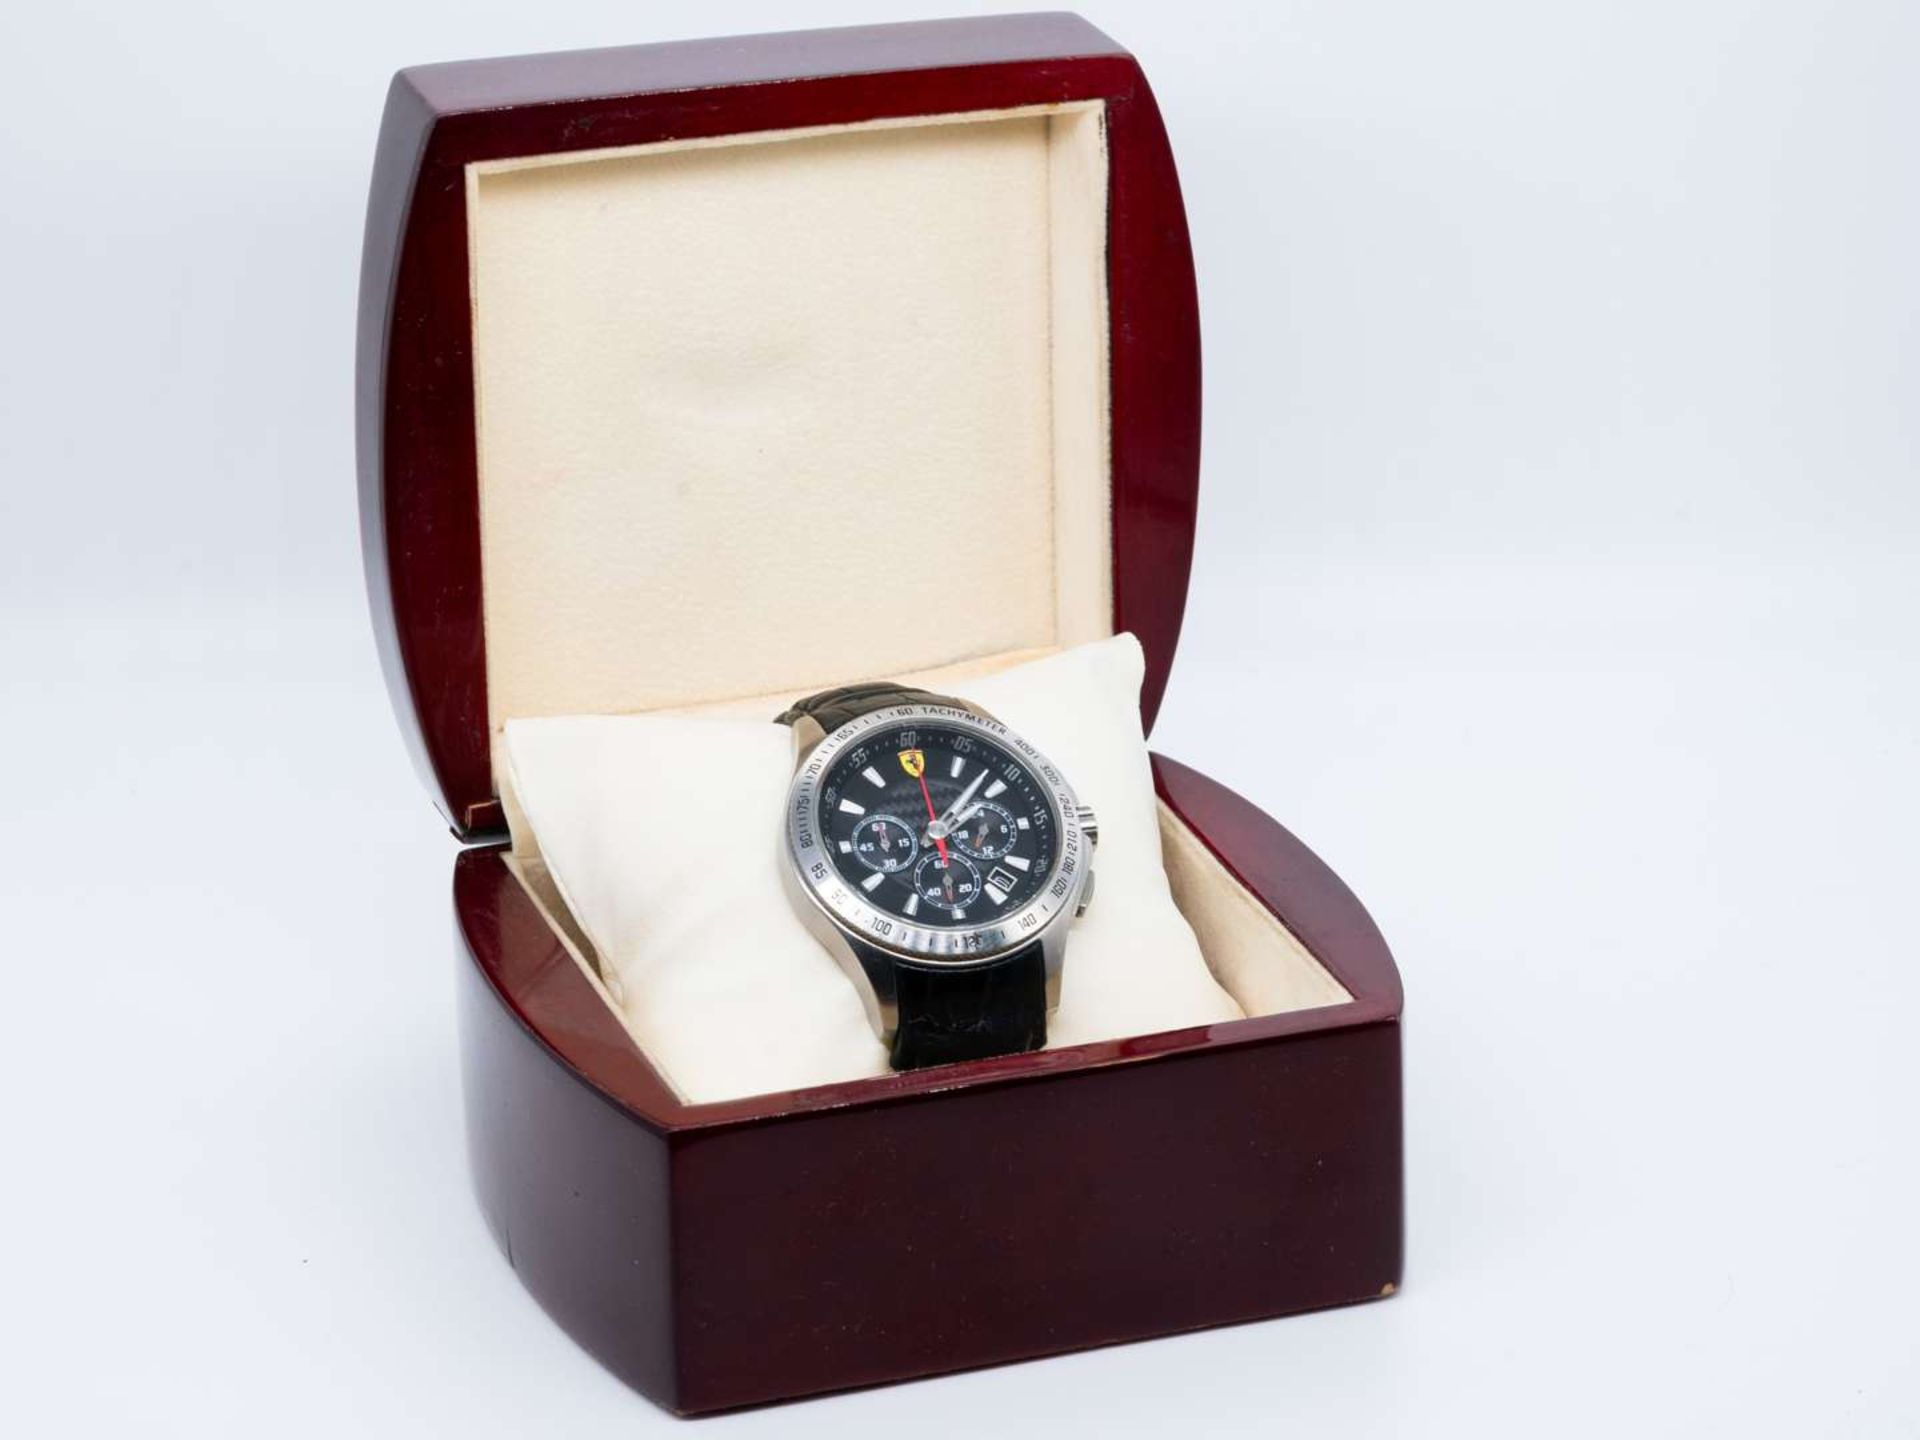 FERRARI, Scuderia, a quartz, stainless steel, two button chronograph wristwatch. - Image 3 of 4